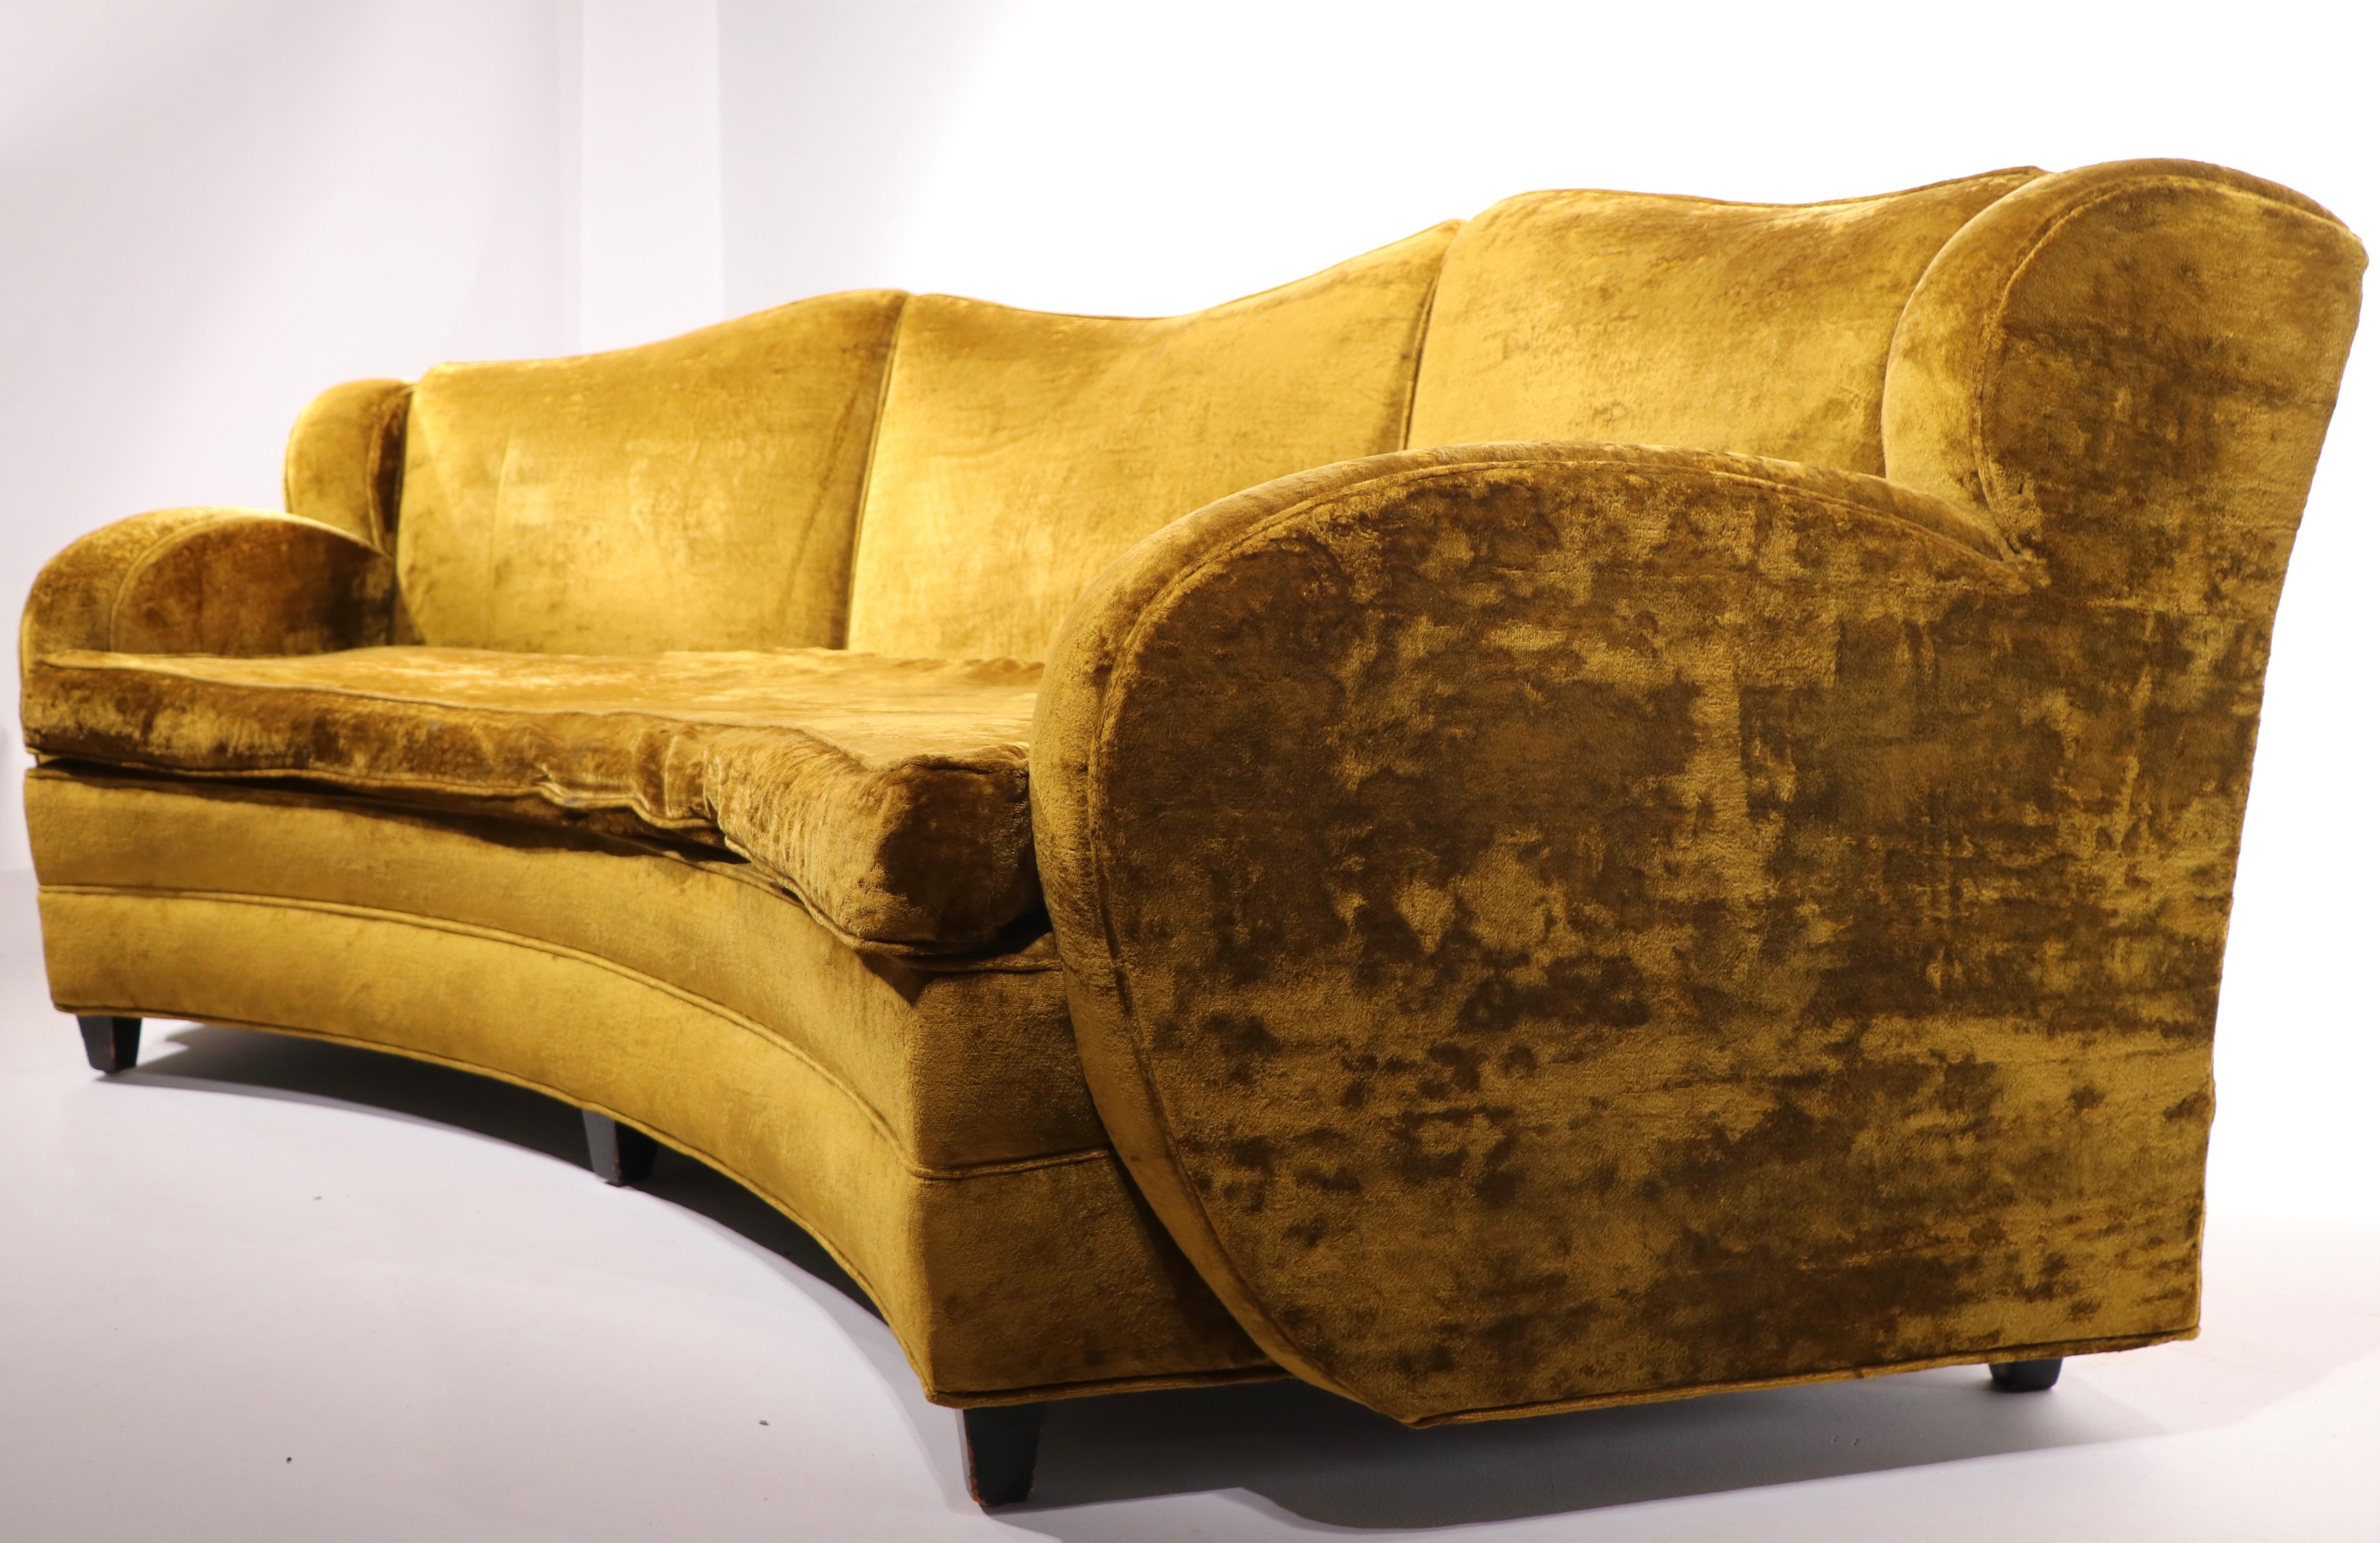 Upholstery Art Deco Sofa Hollywood Regency Glamorous 